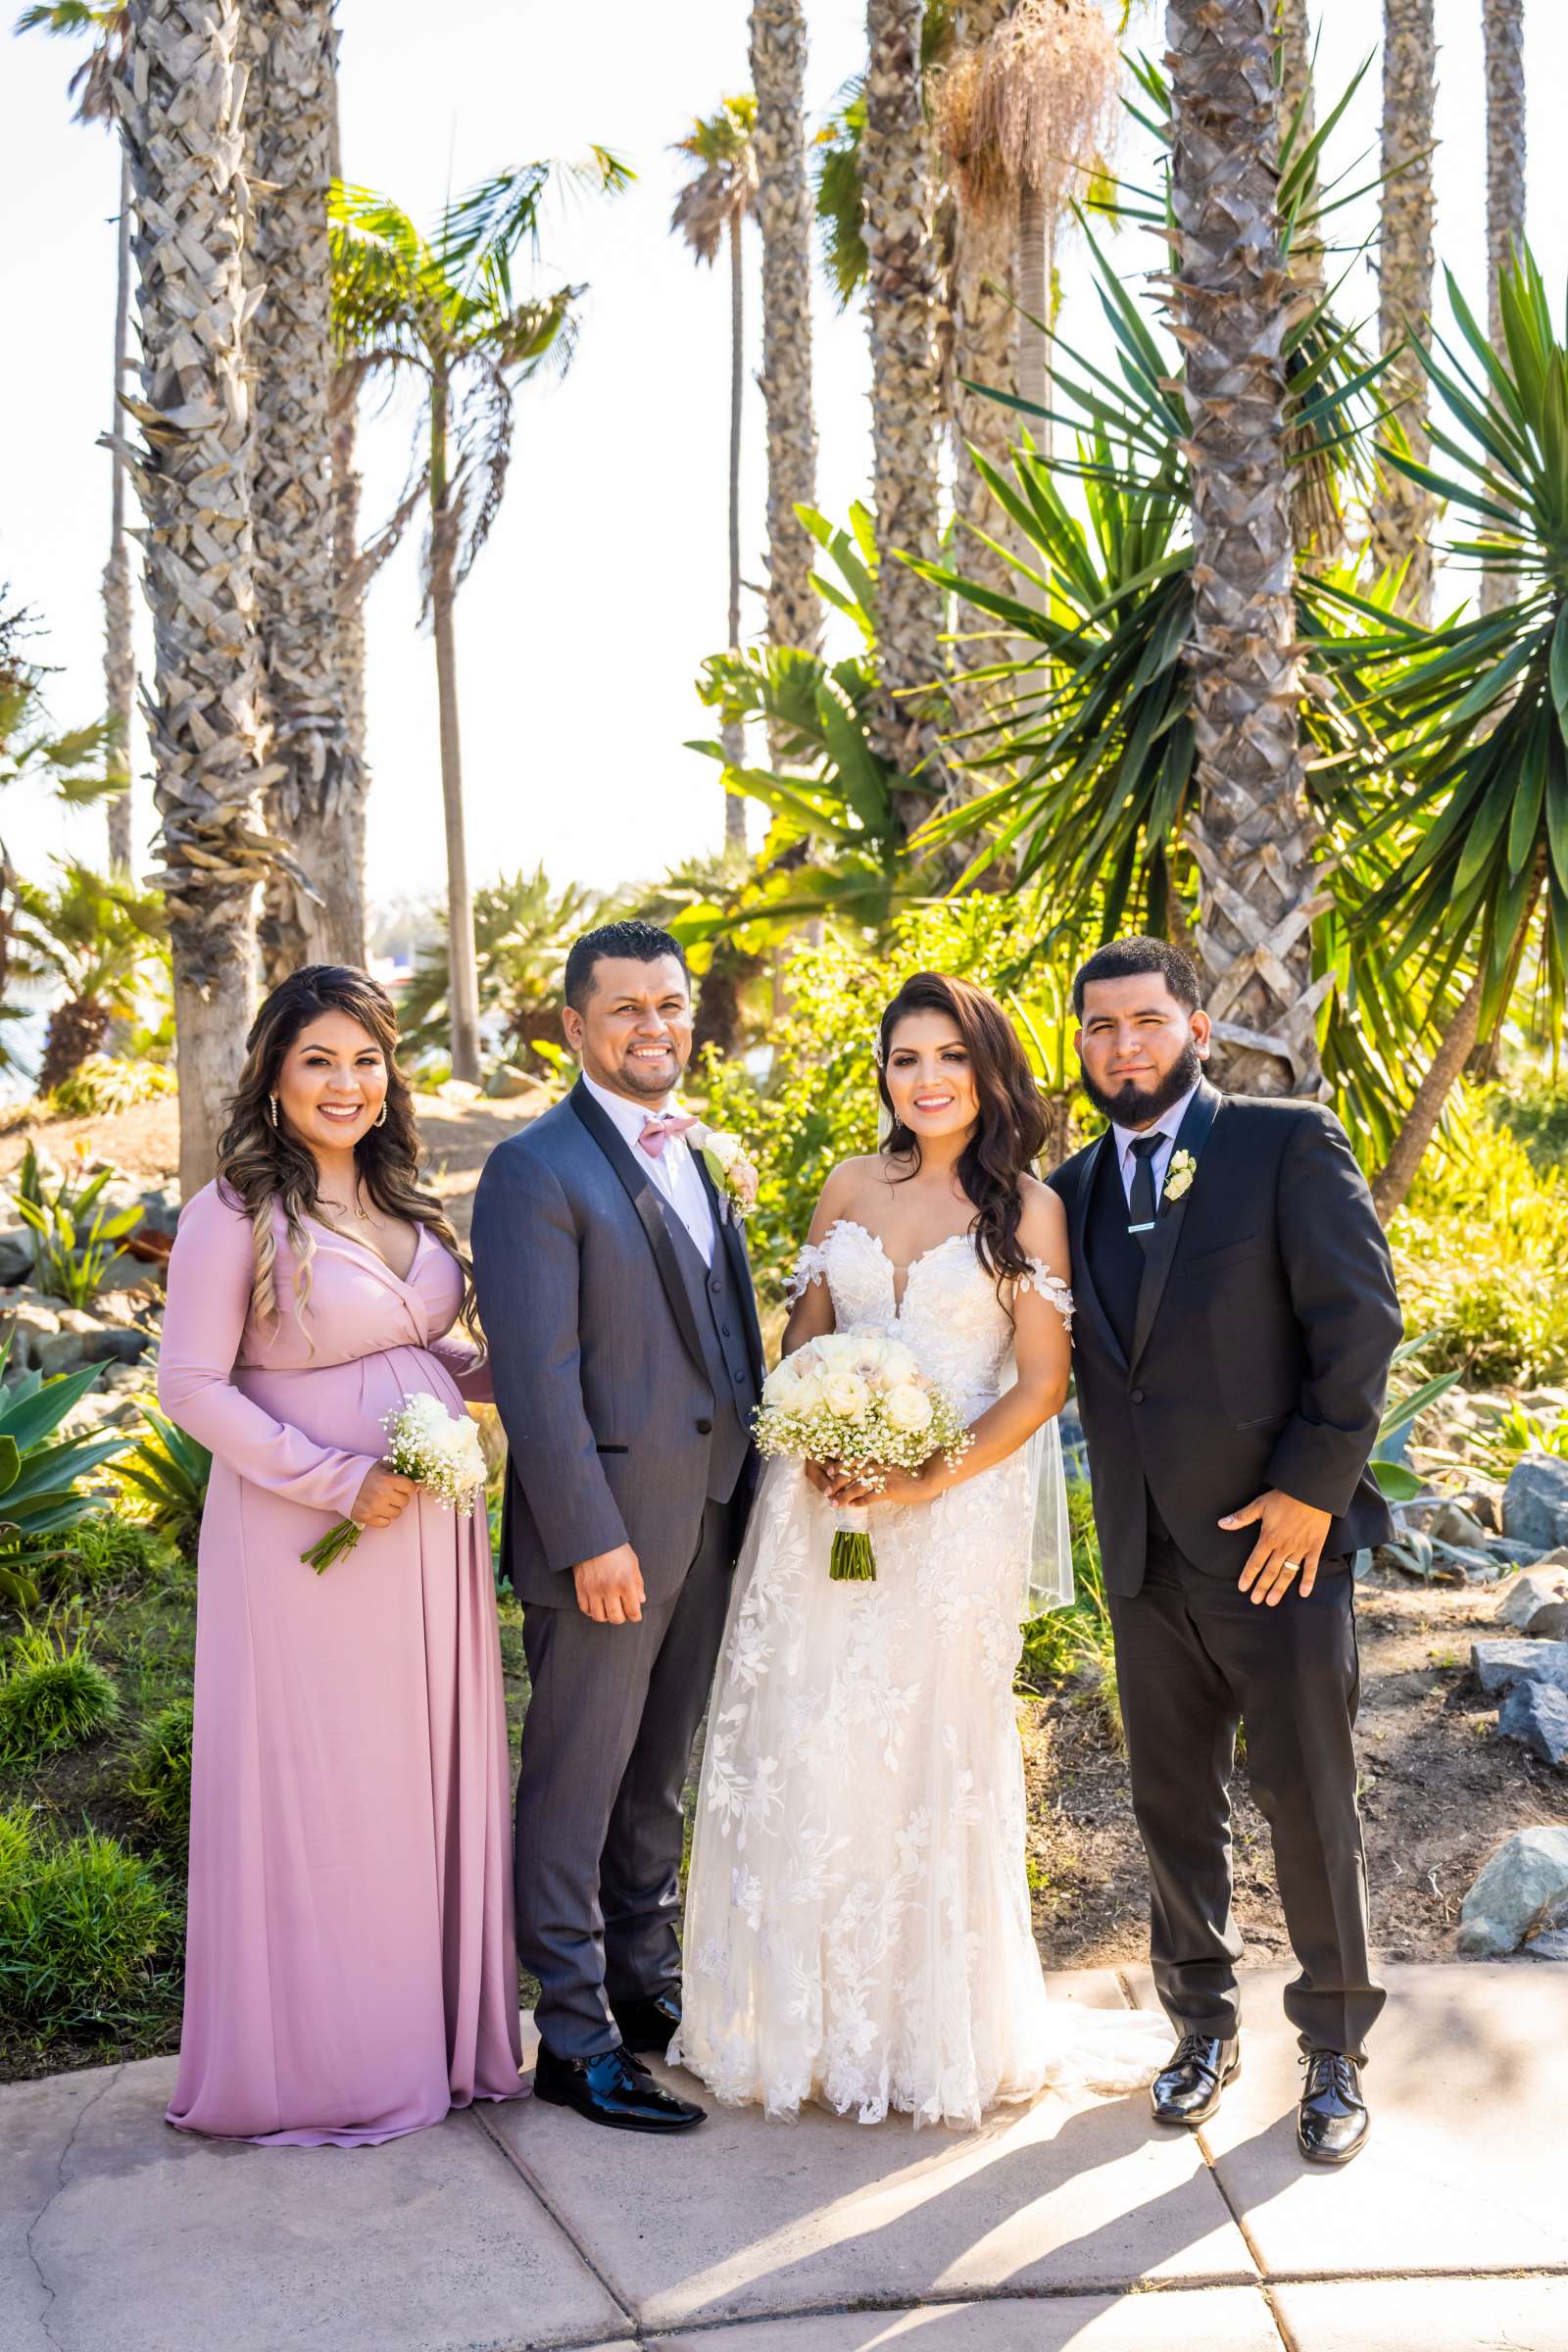 Paradise Point Wedding, Sinthia and Jose Wedding Photo #61 by True Photography